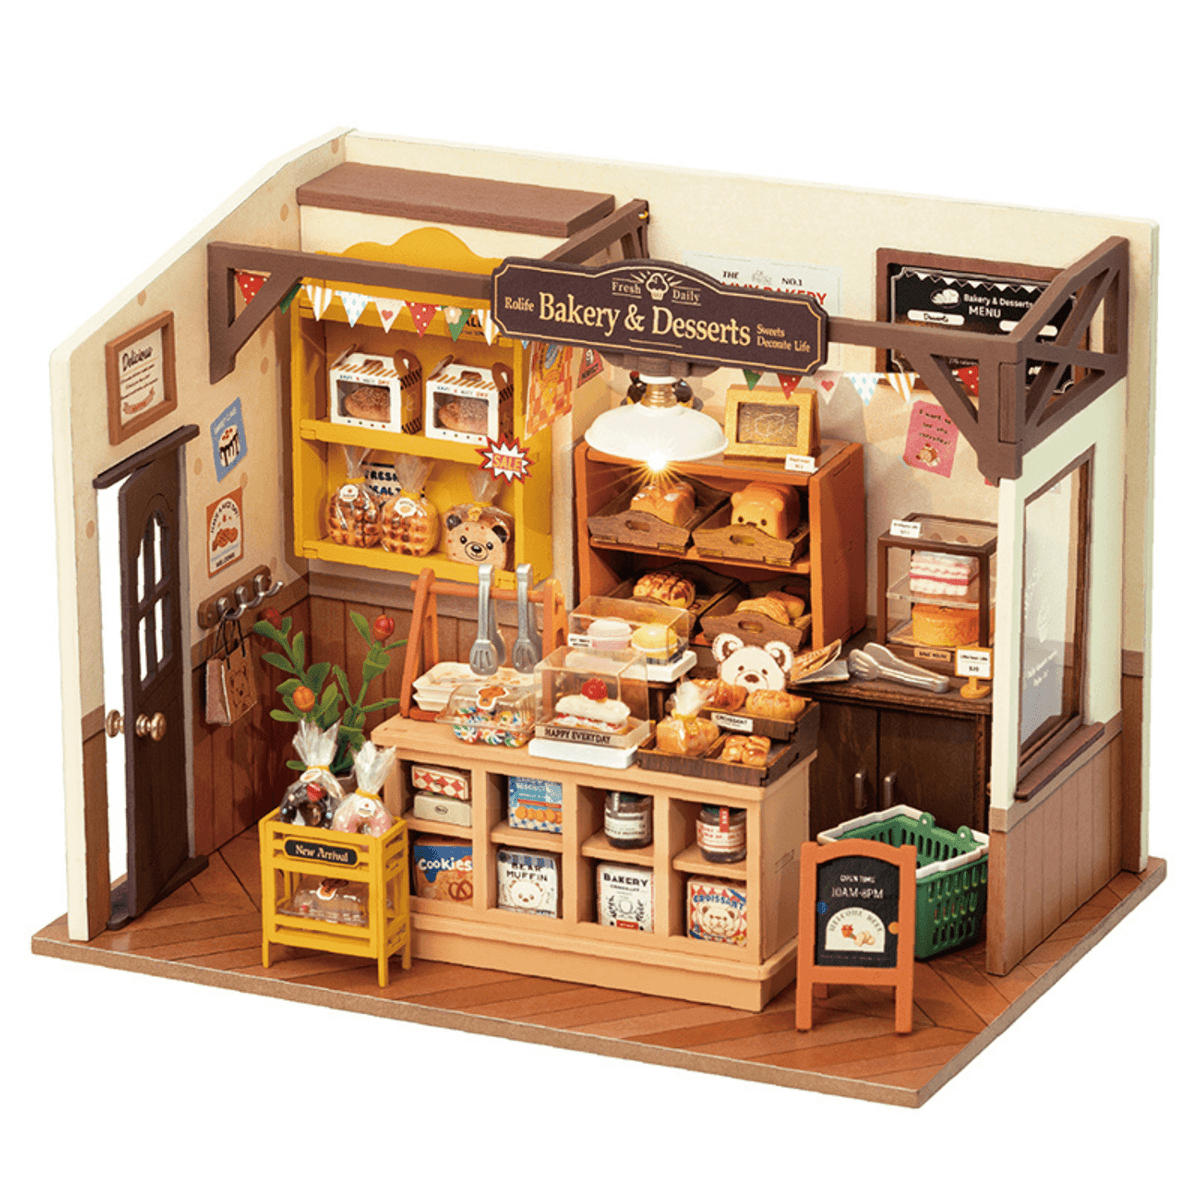 DIY Miniature Dollhouse - Happy Corner Series Carl's Fruit Shop